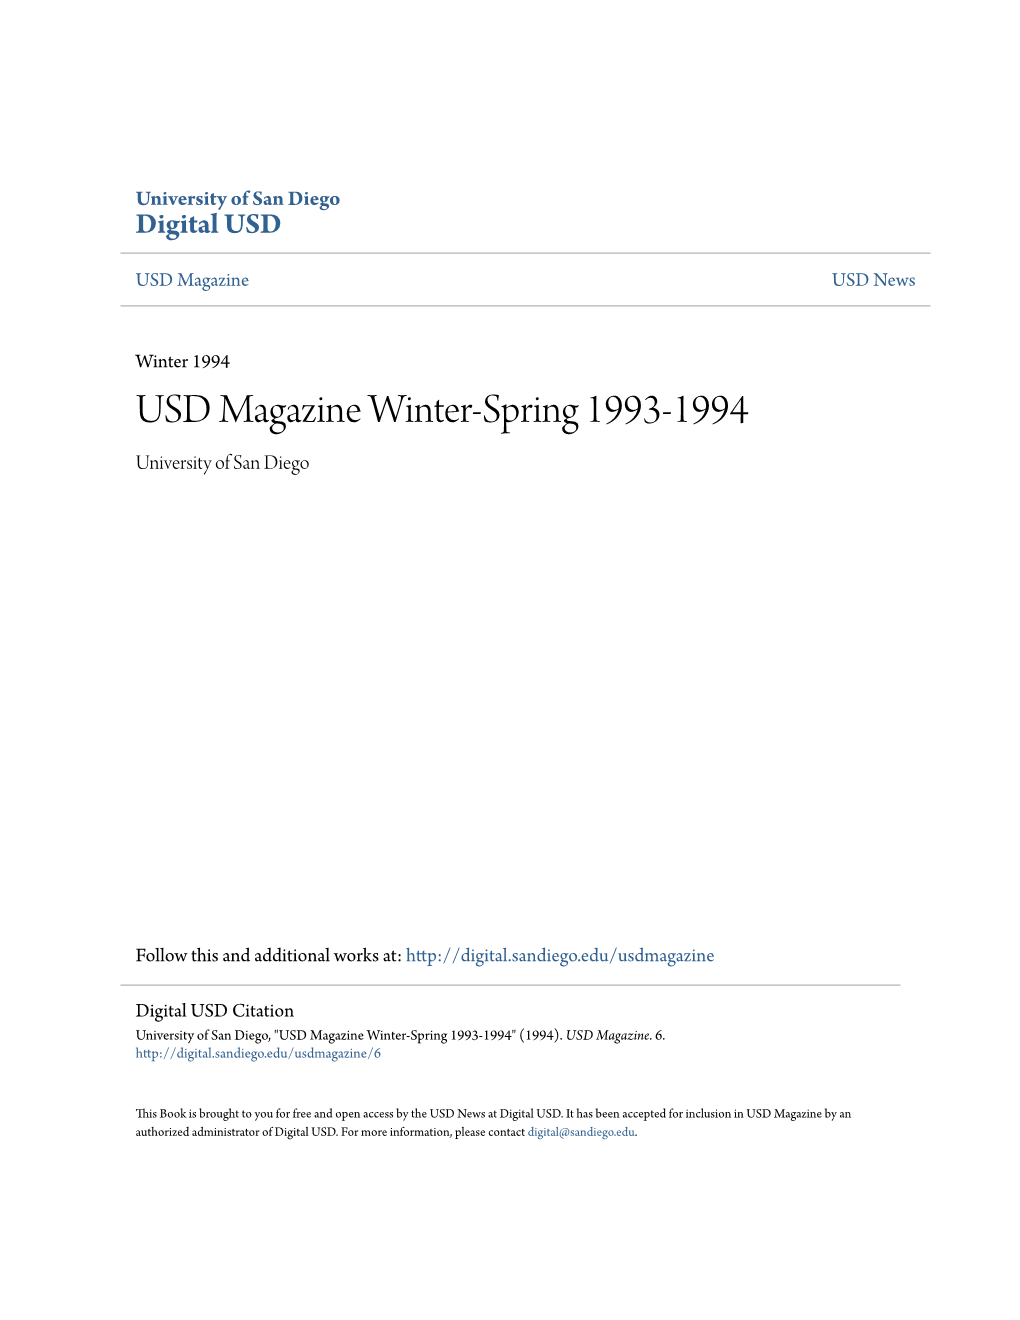 USD Magazine Winter-Spring 1993-1994 University of San Diego